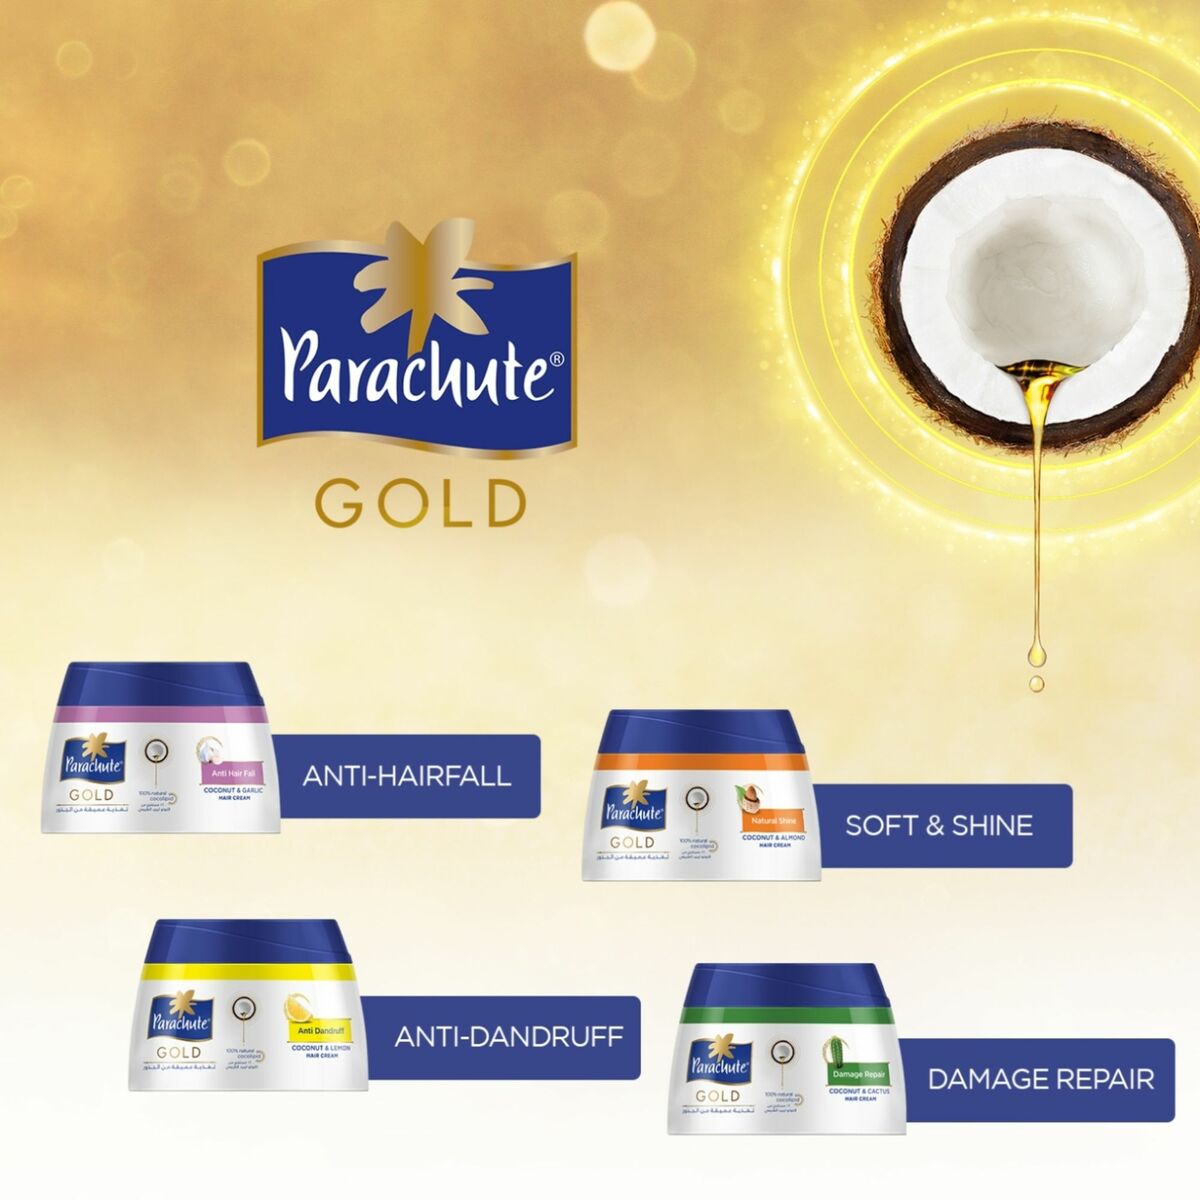 Parachute Gold Coconut & Lemon Hair Cream 140 ml